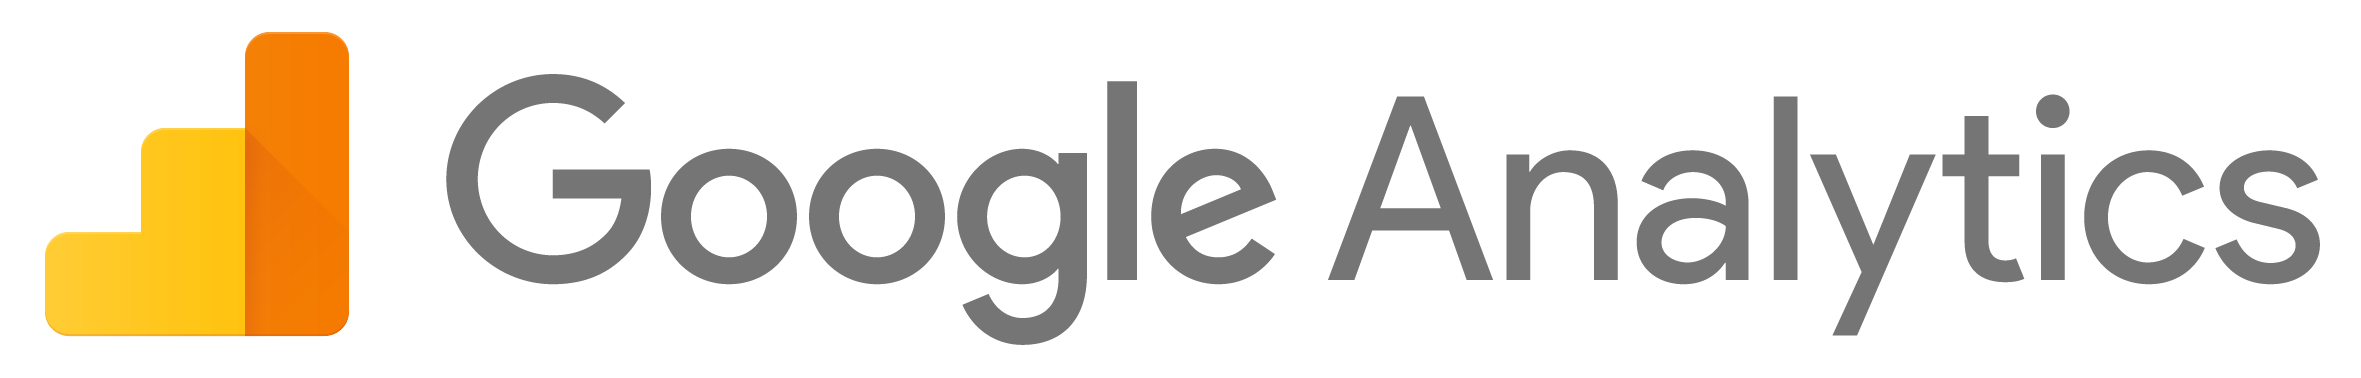 Logo - Google Analytics | Gravi-T Communication